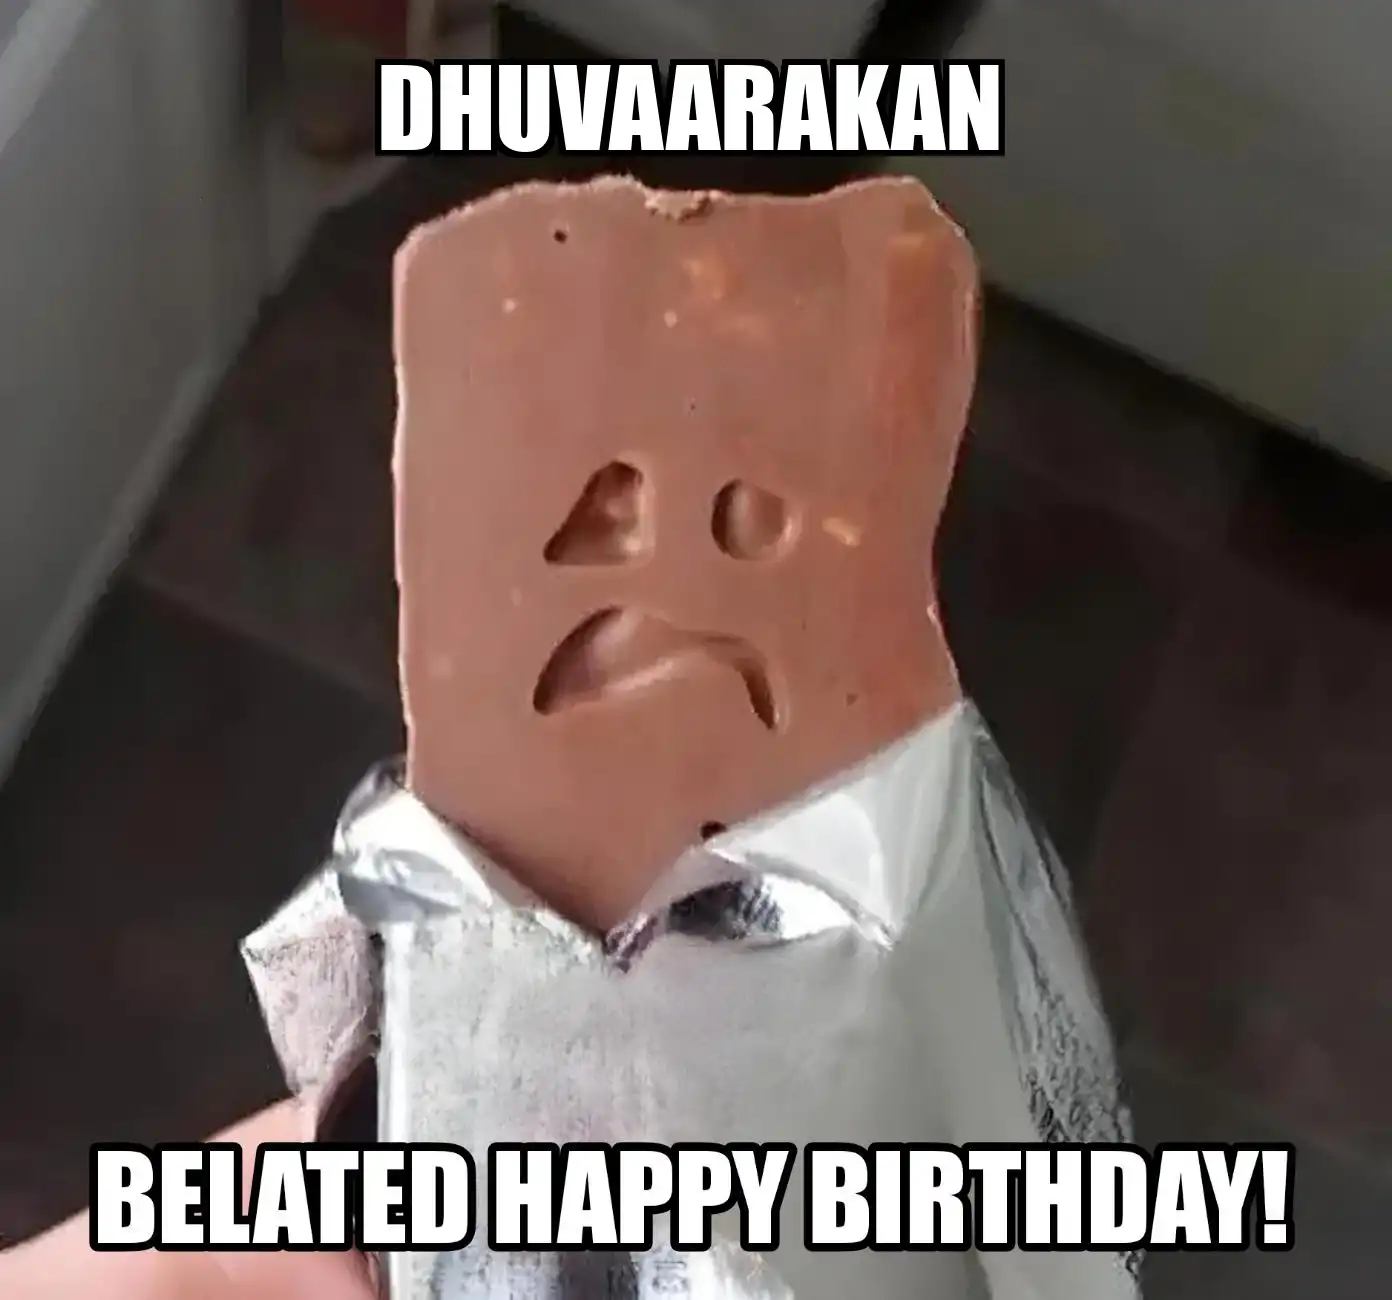 Happy Birthday Dhuvaarakan Belated Happy Birthday Meme